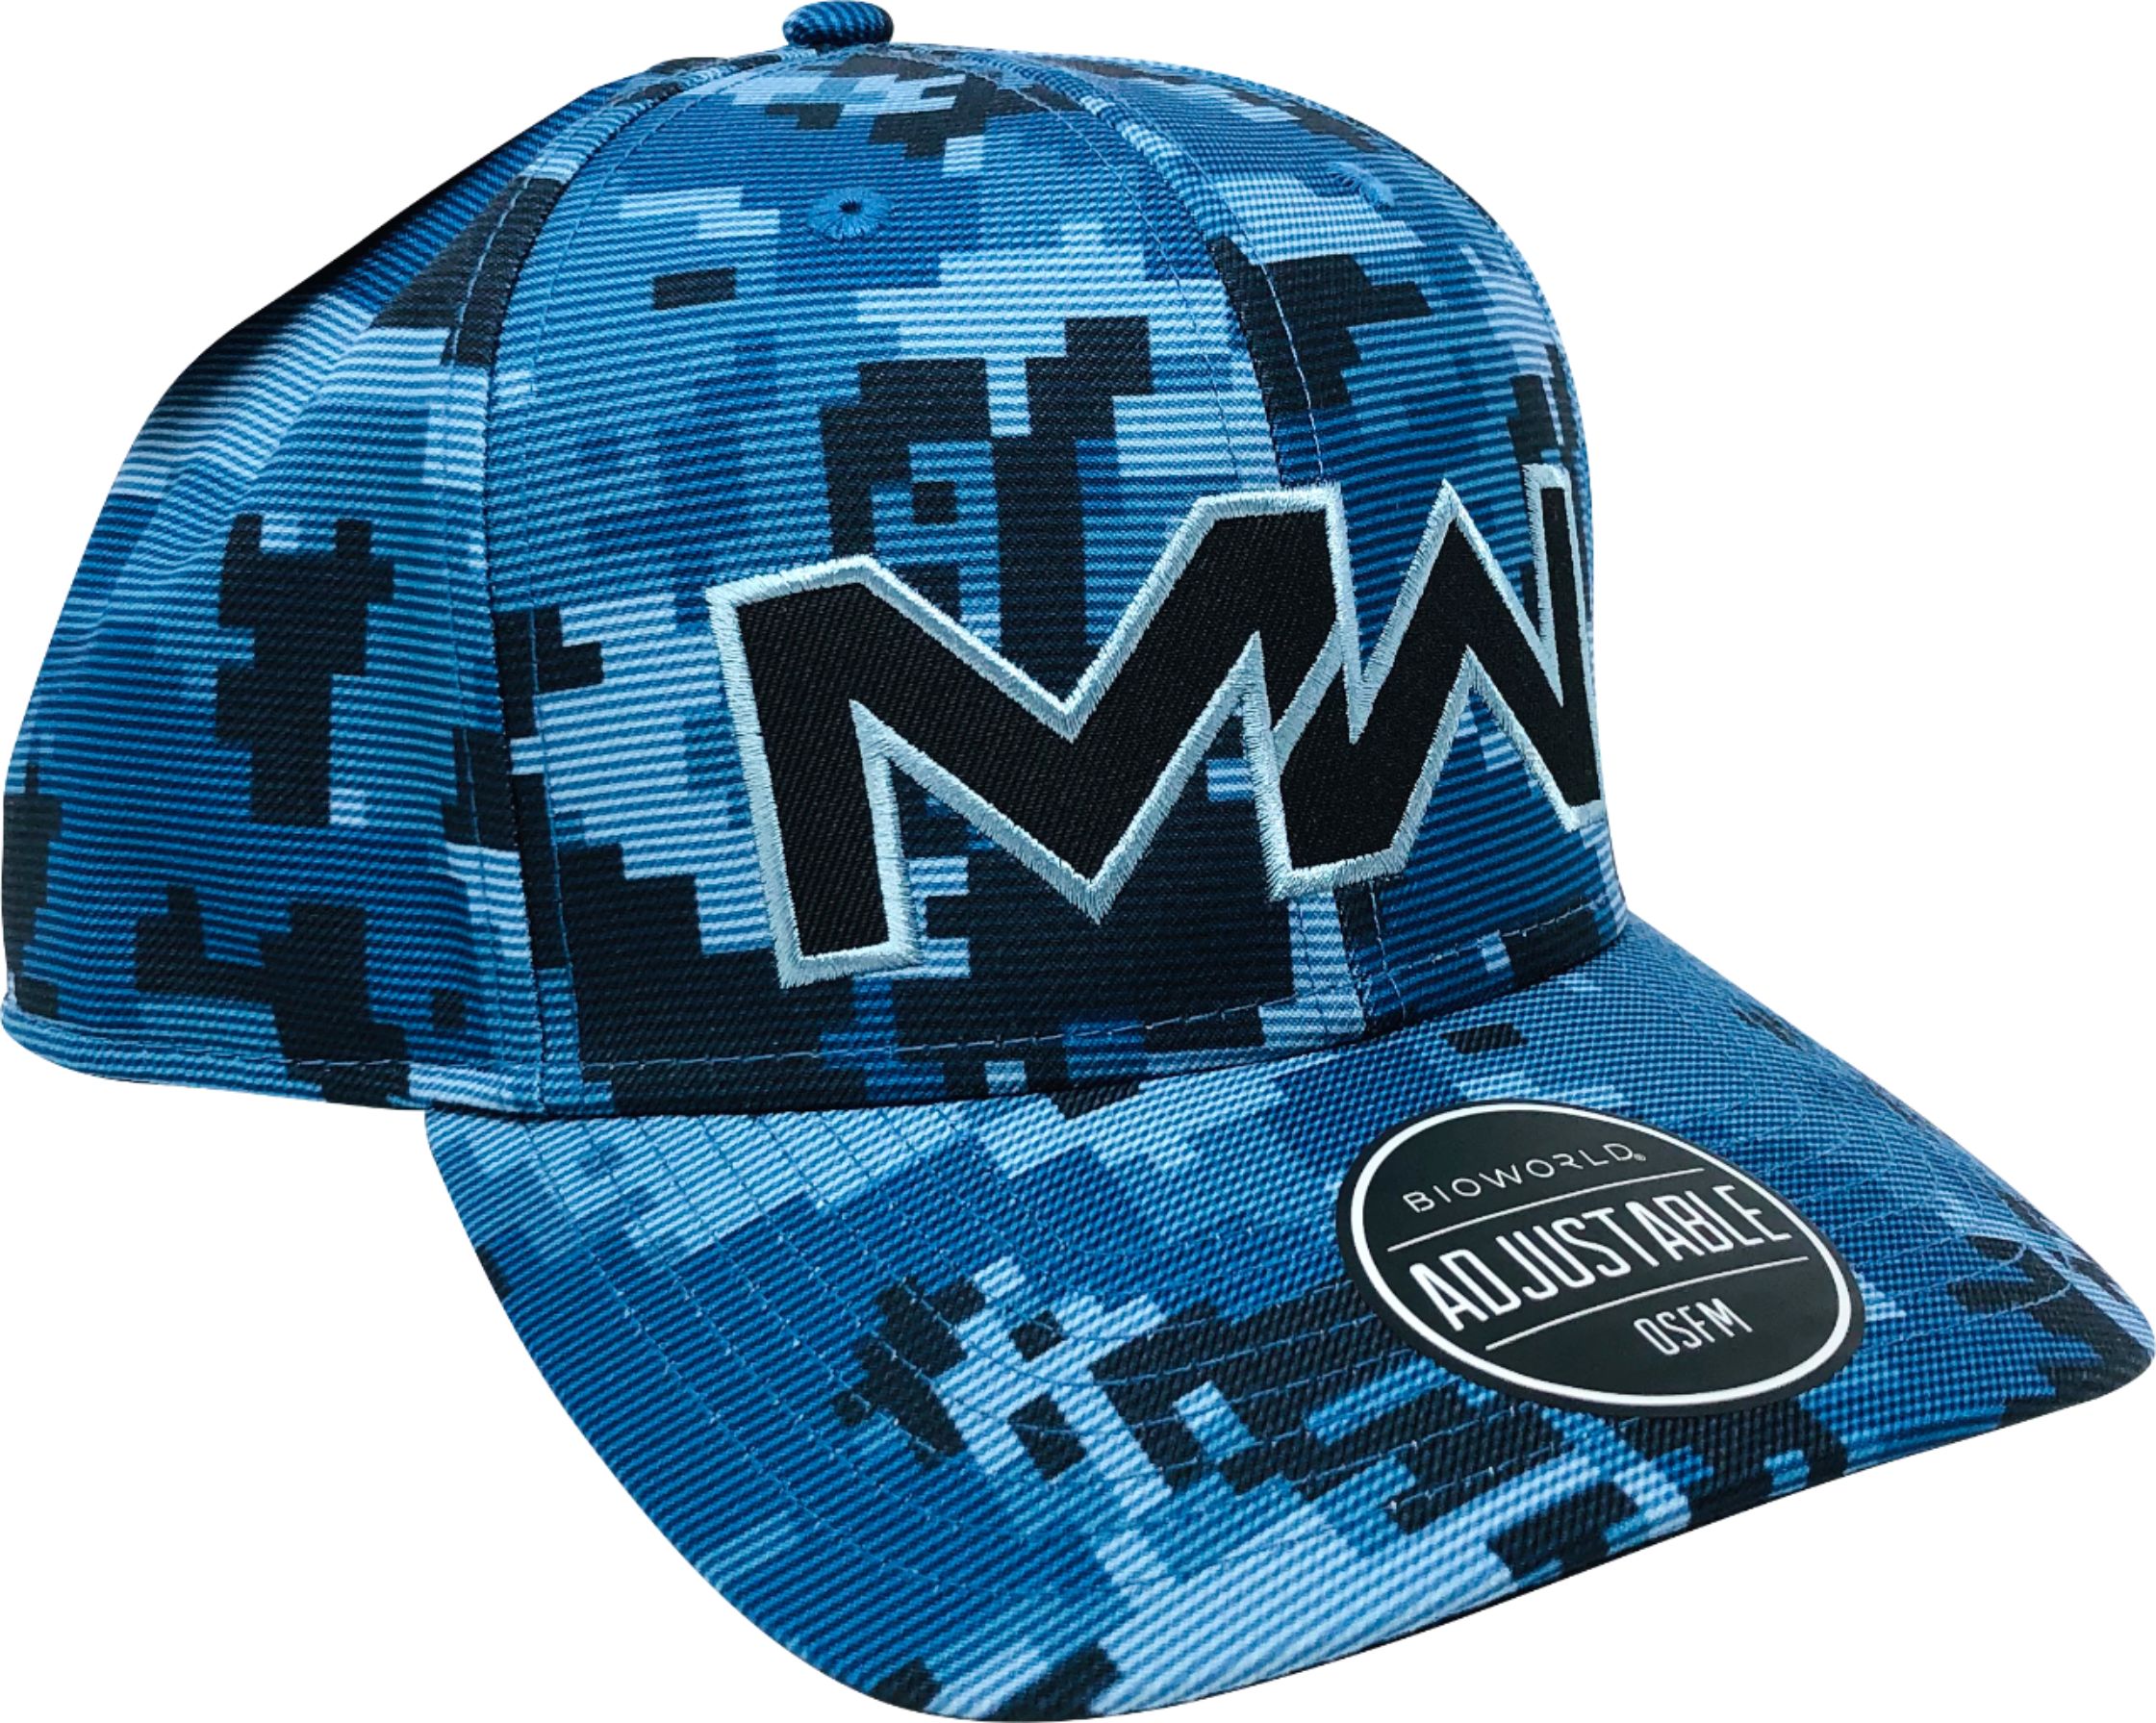 Call of Duty Modern Warfare - Precurved Snapback Hat - Blue